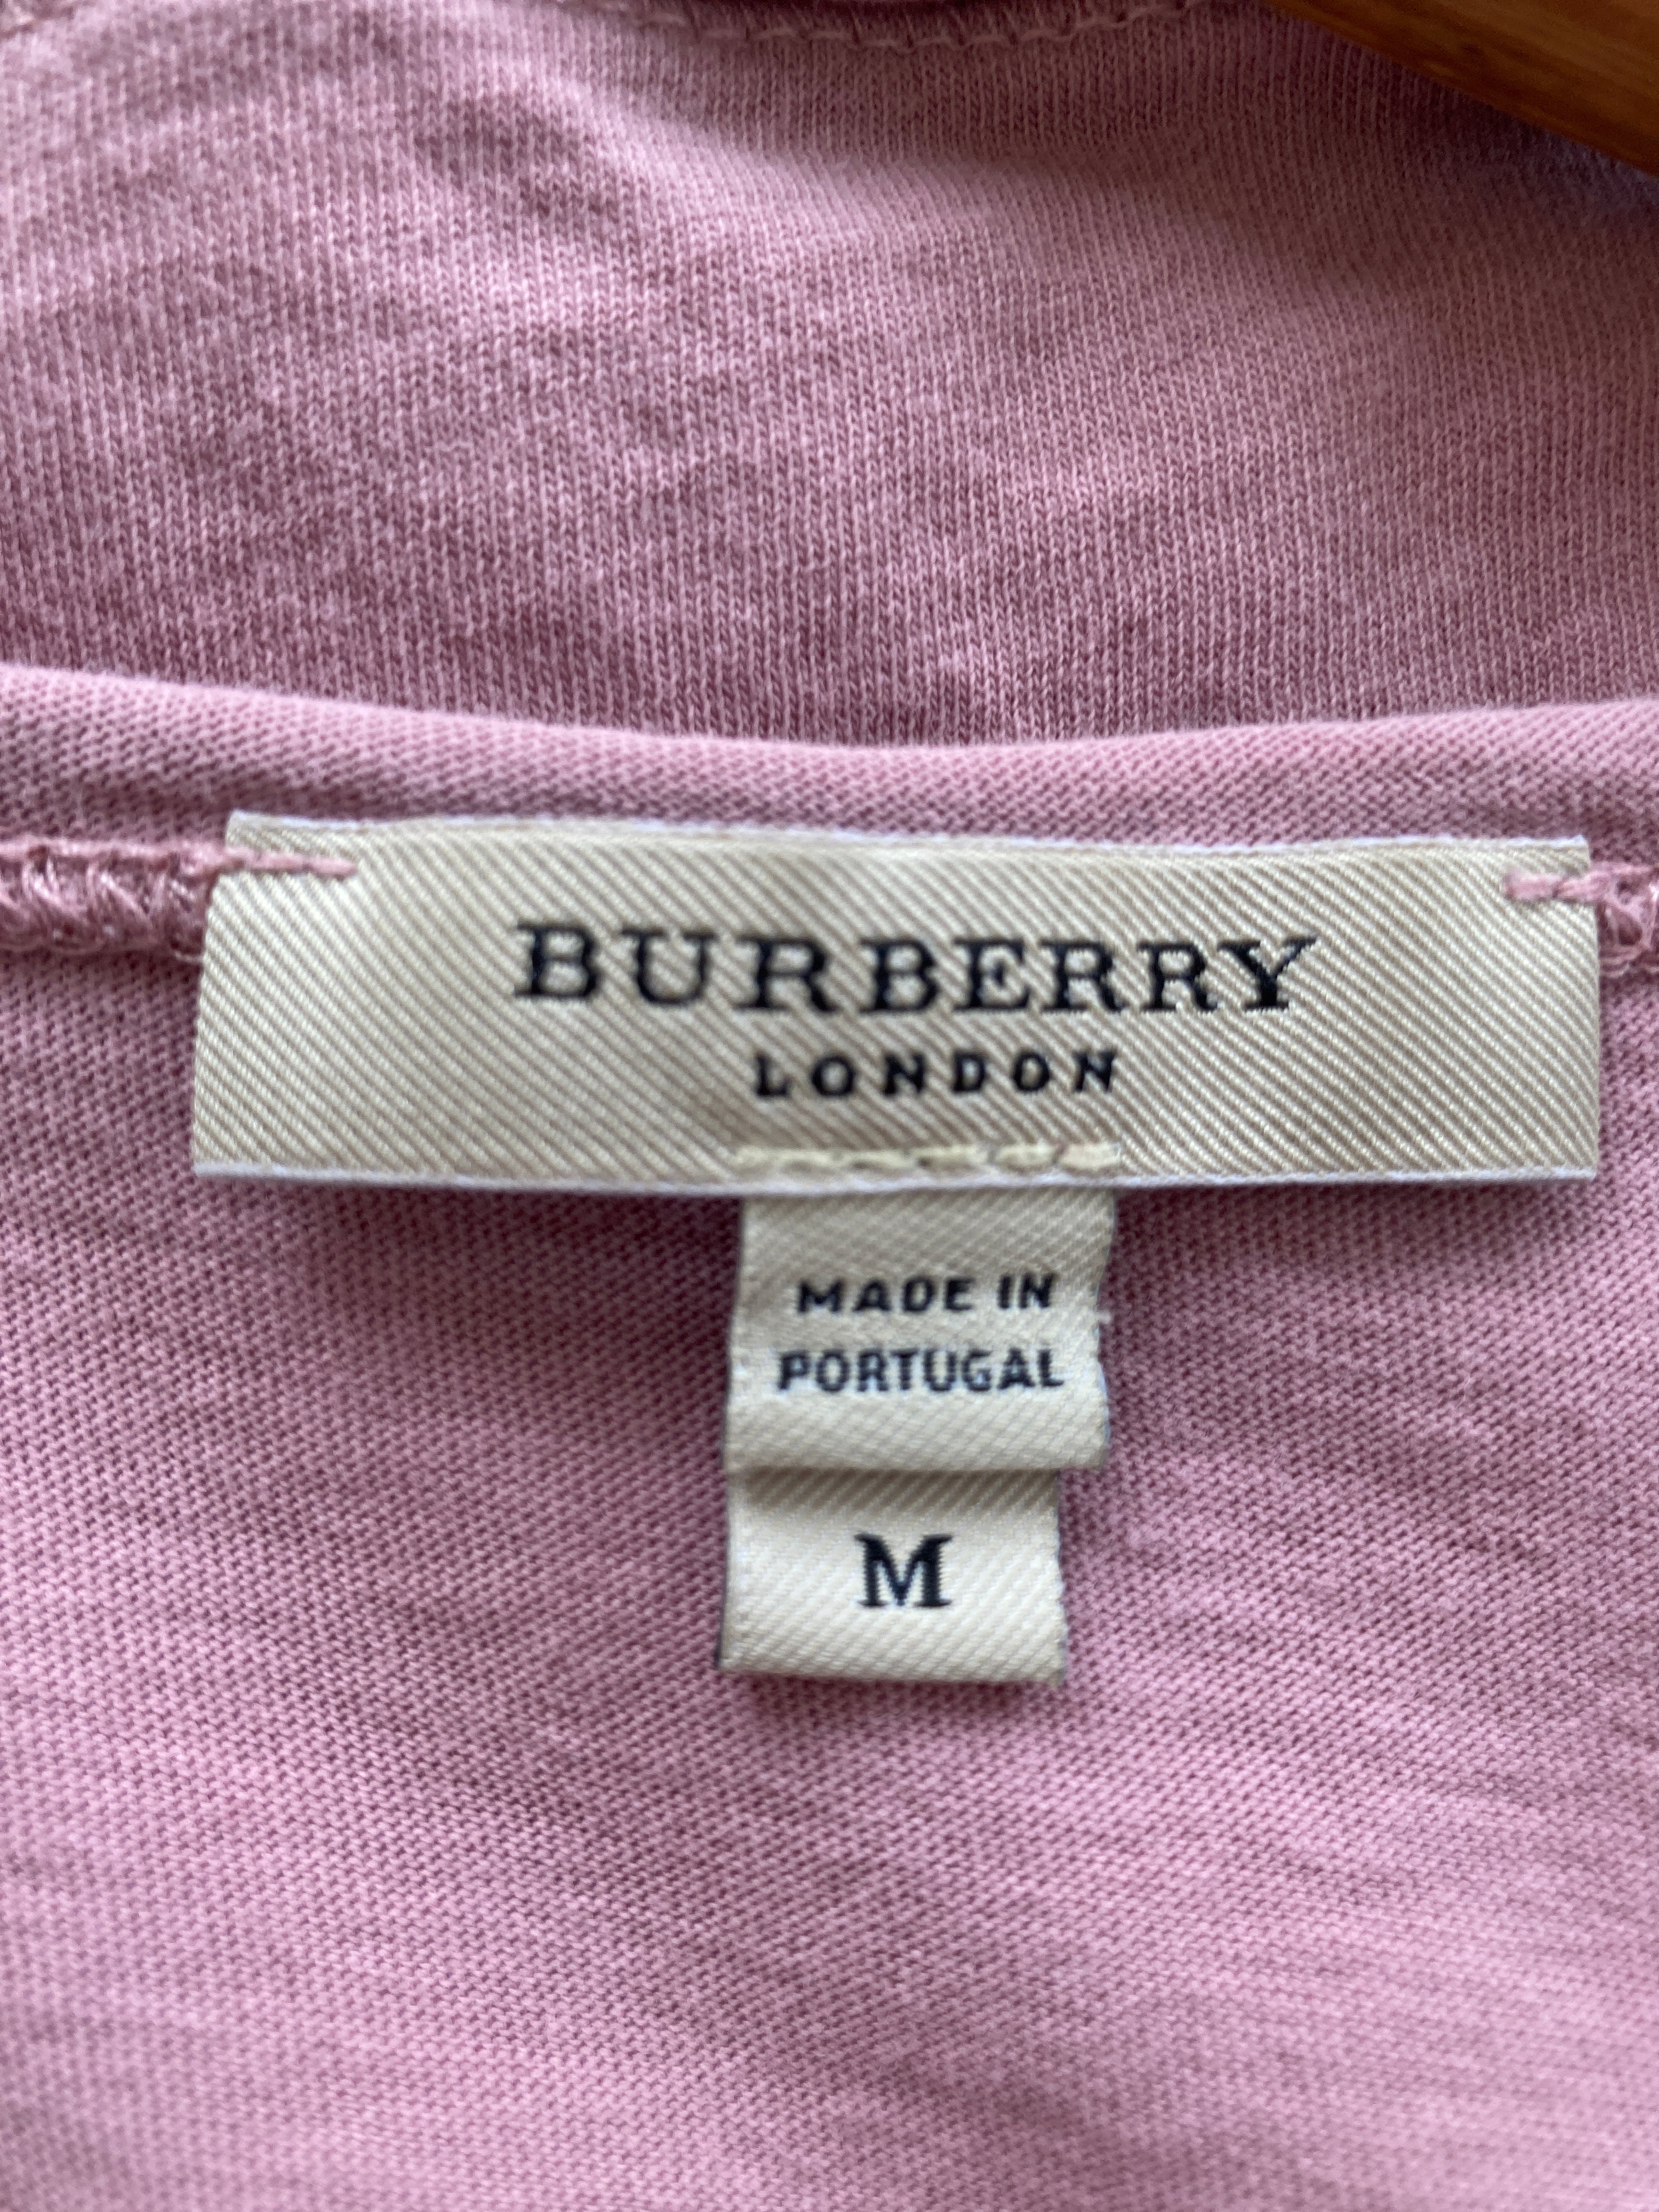 Burberry T-shirt, M